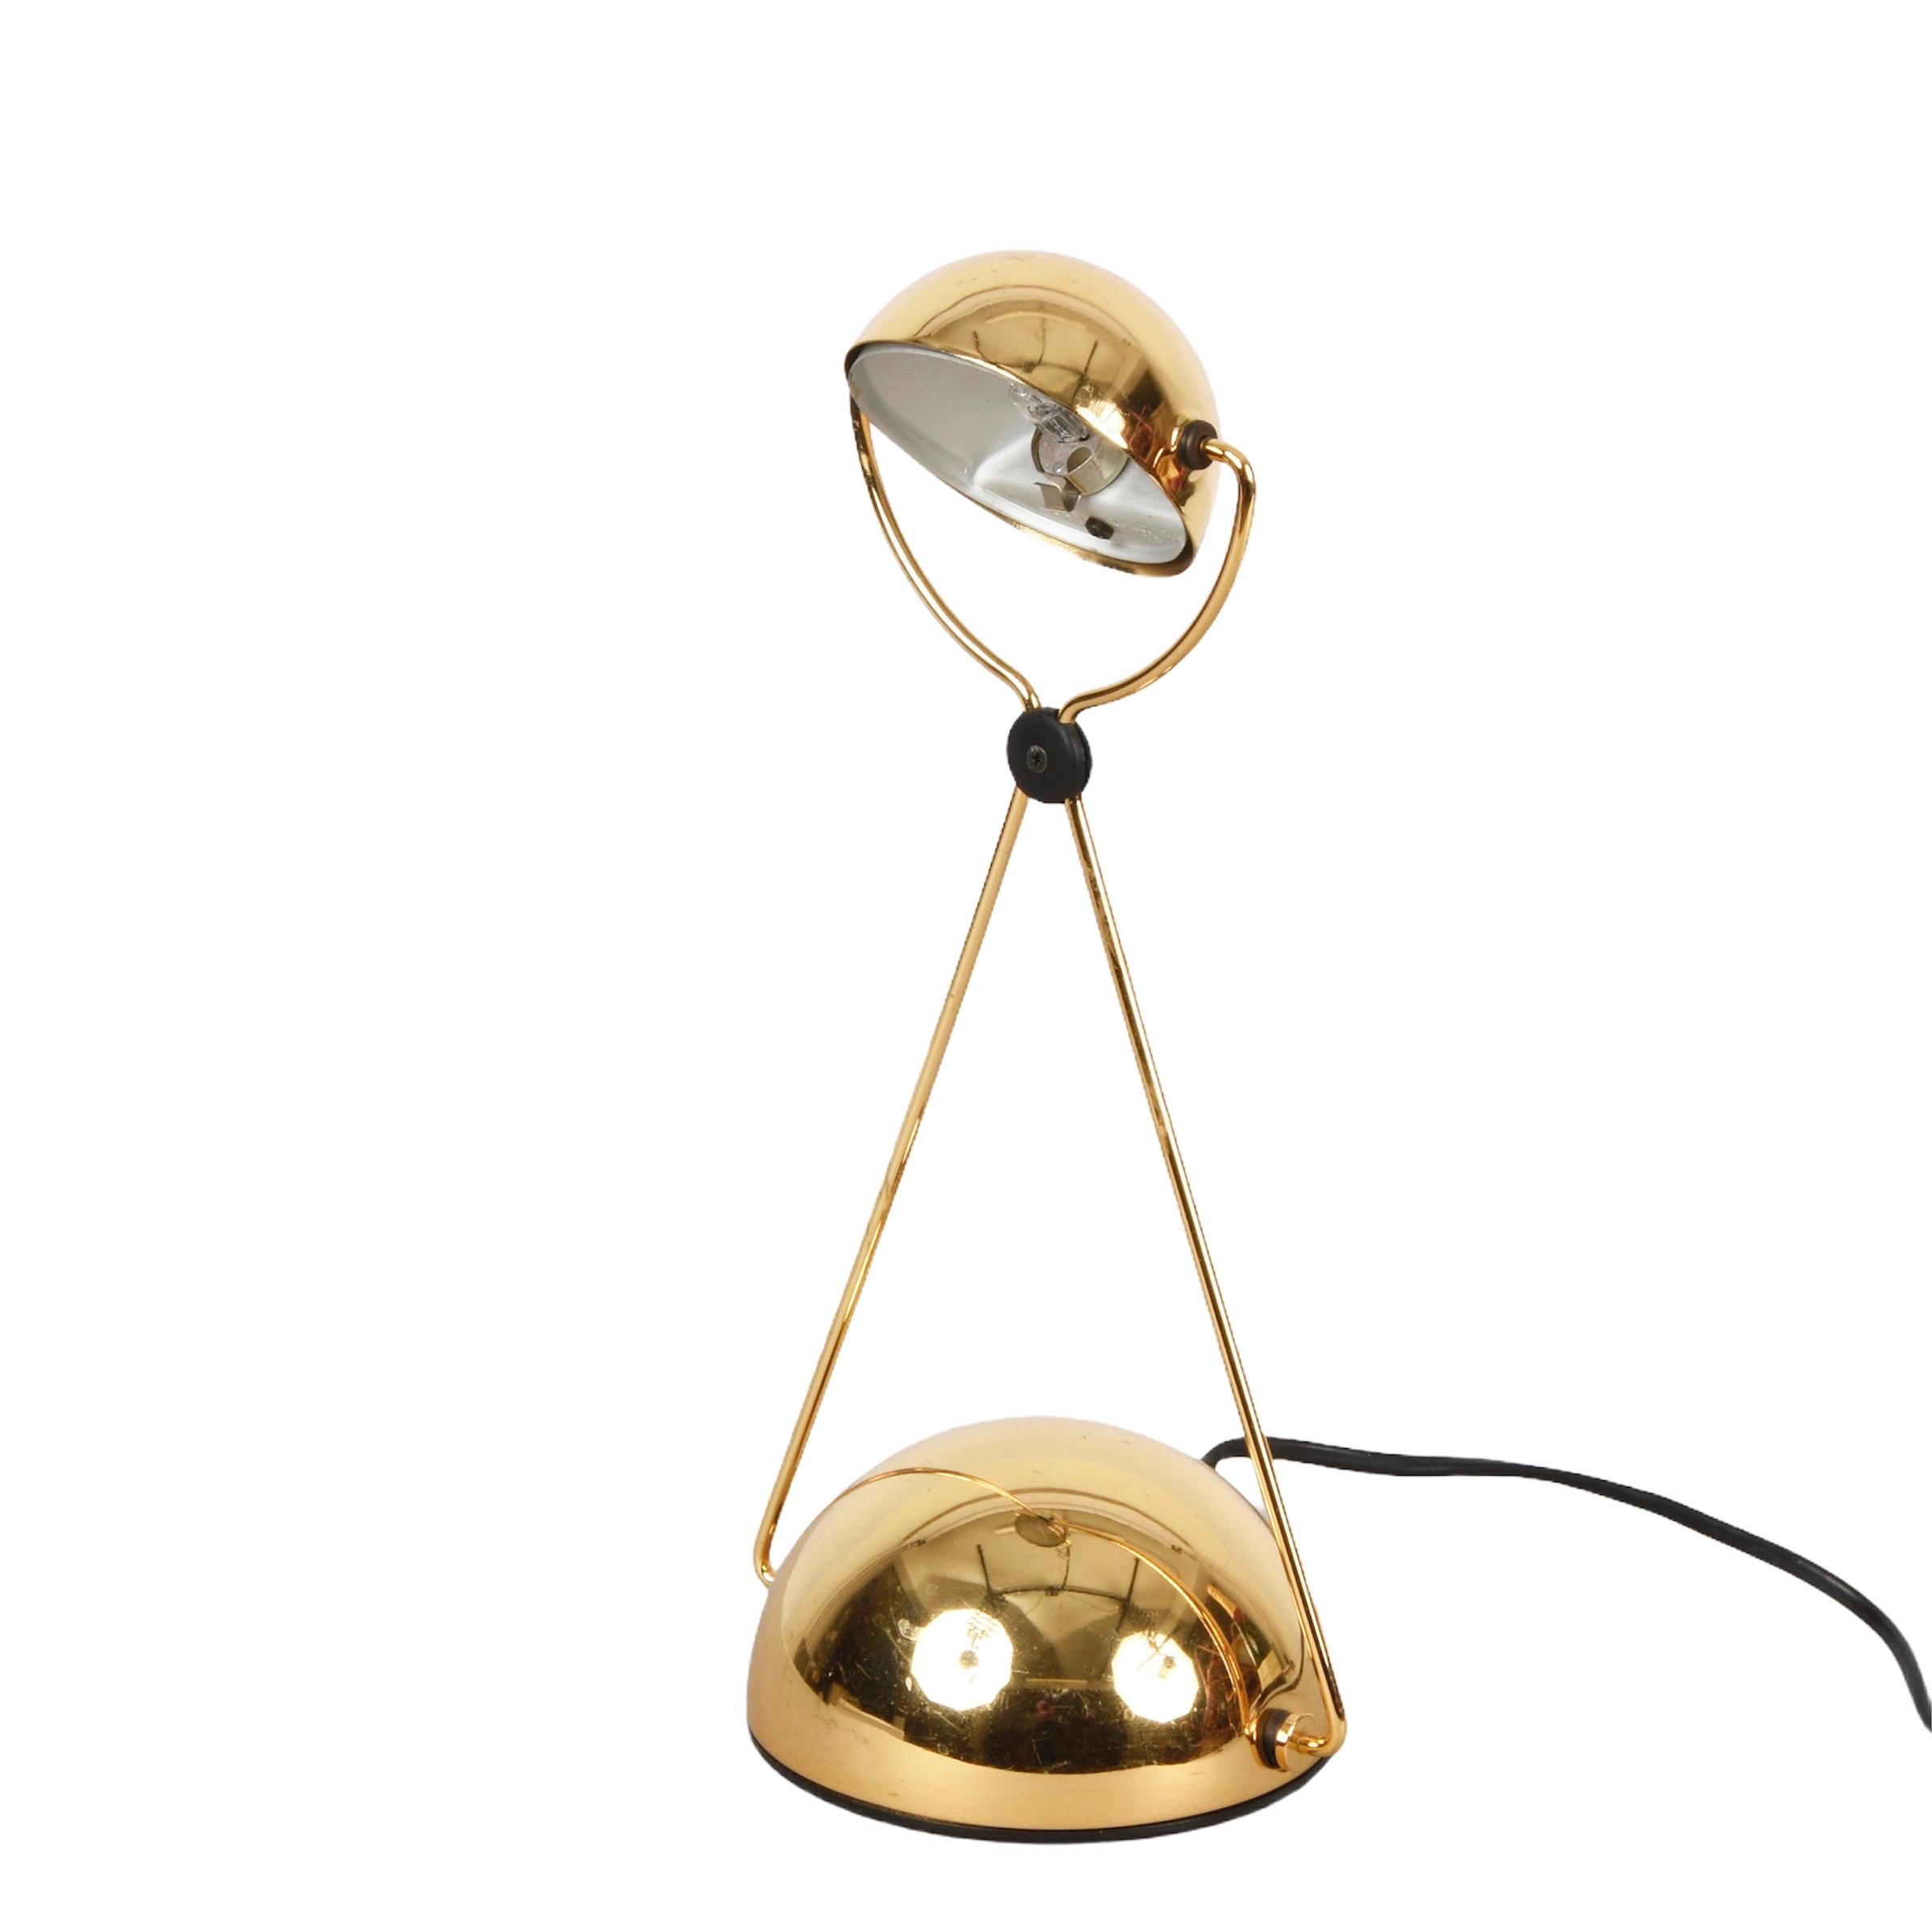 Stefano Cevoli Midcentury Gold-Plated Metal Italian Table Lamp 'Meridiana' 1980s For Sale 5